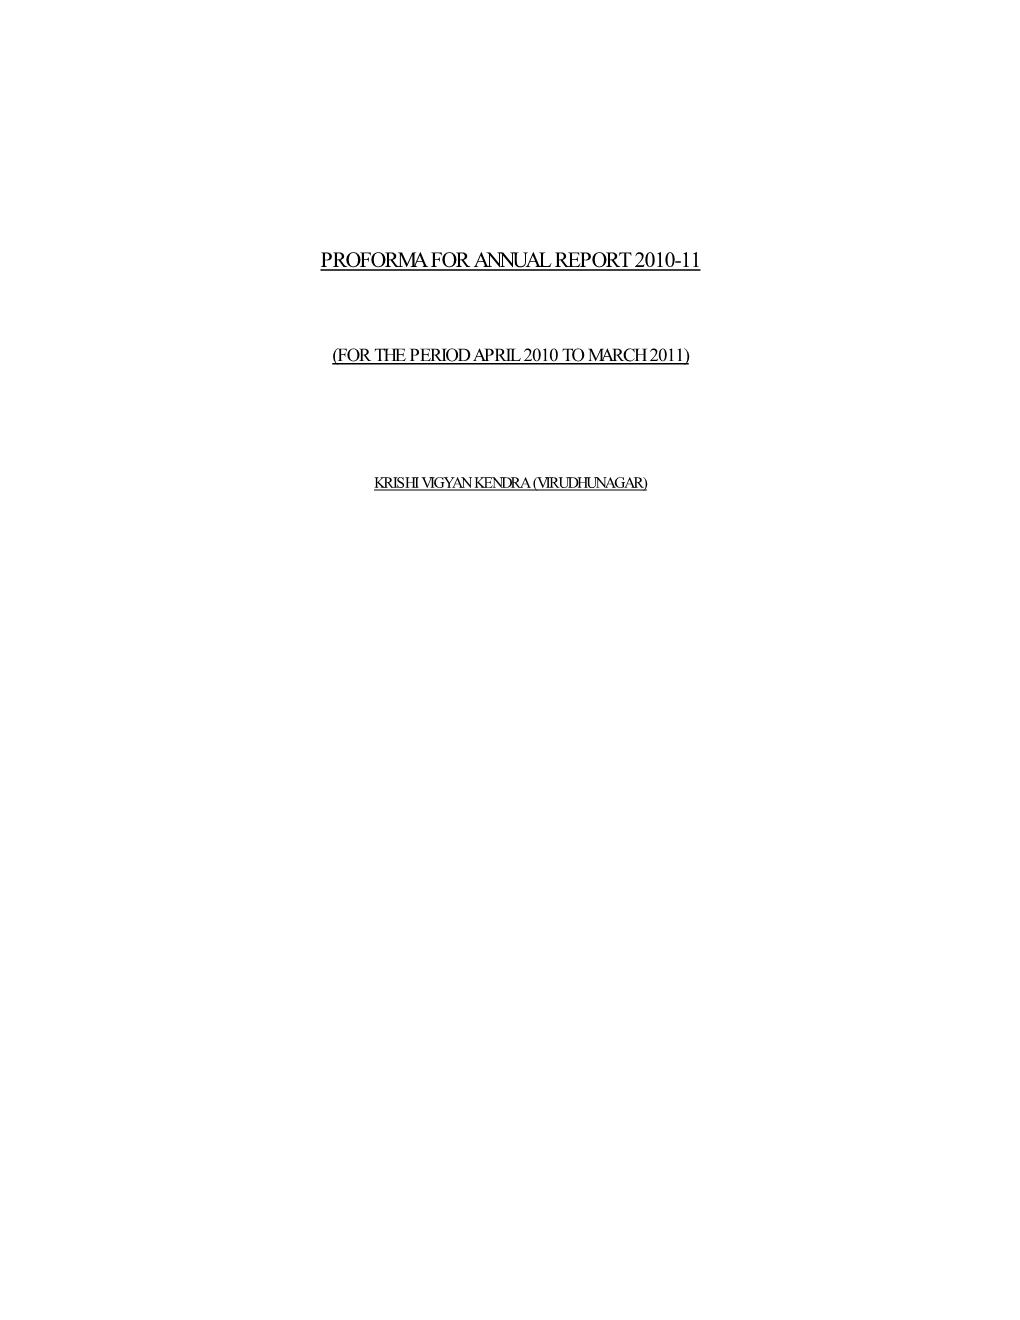 Proforma for Annual Report 2010-11